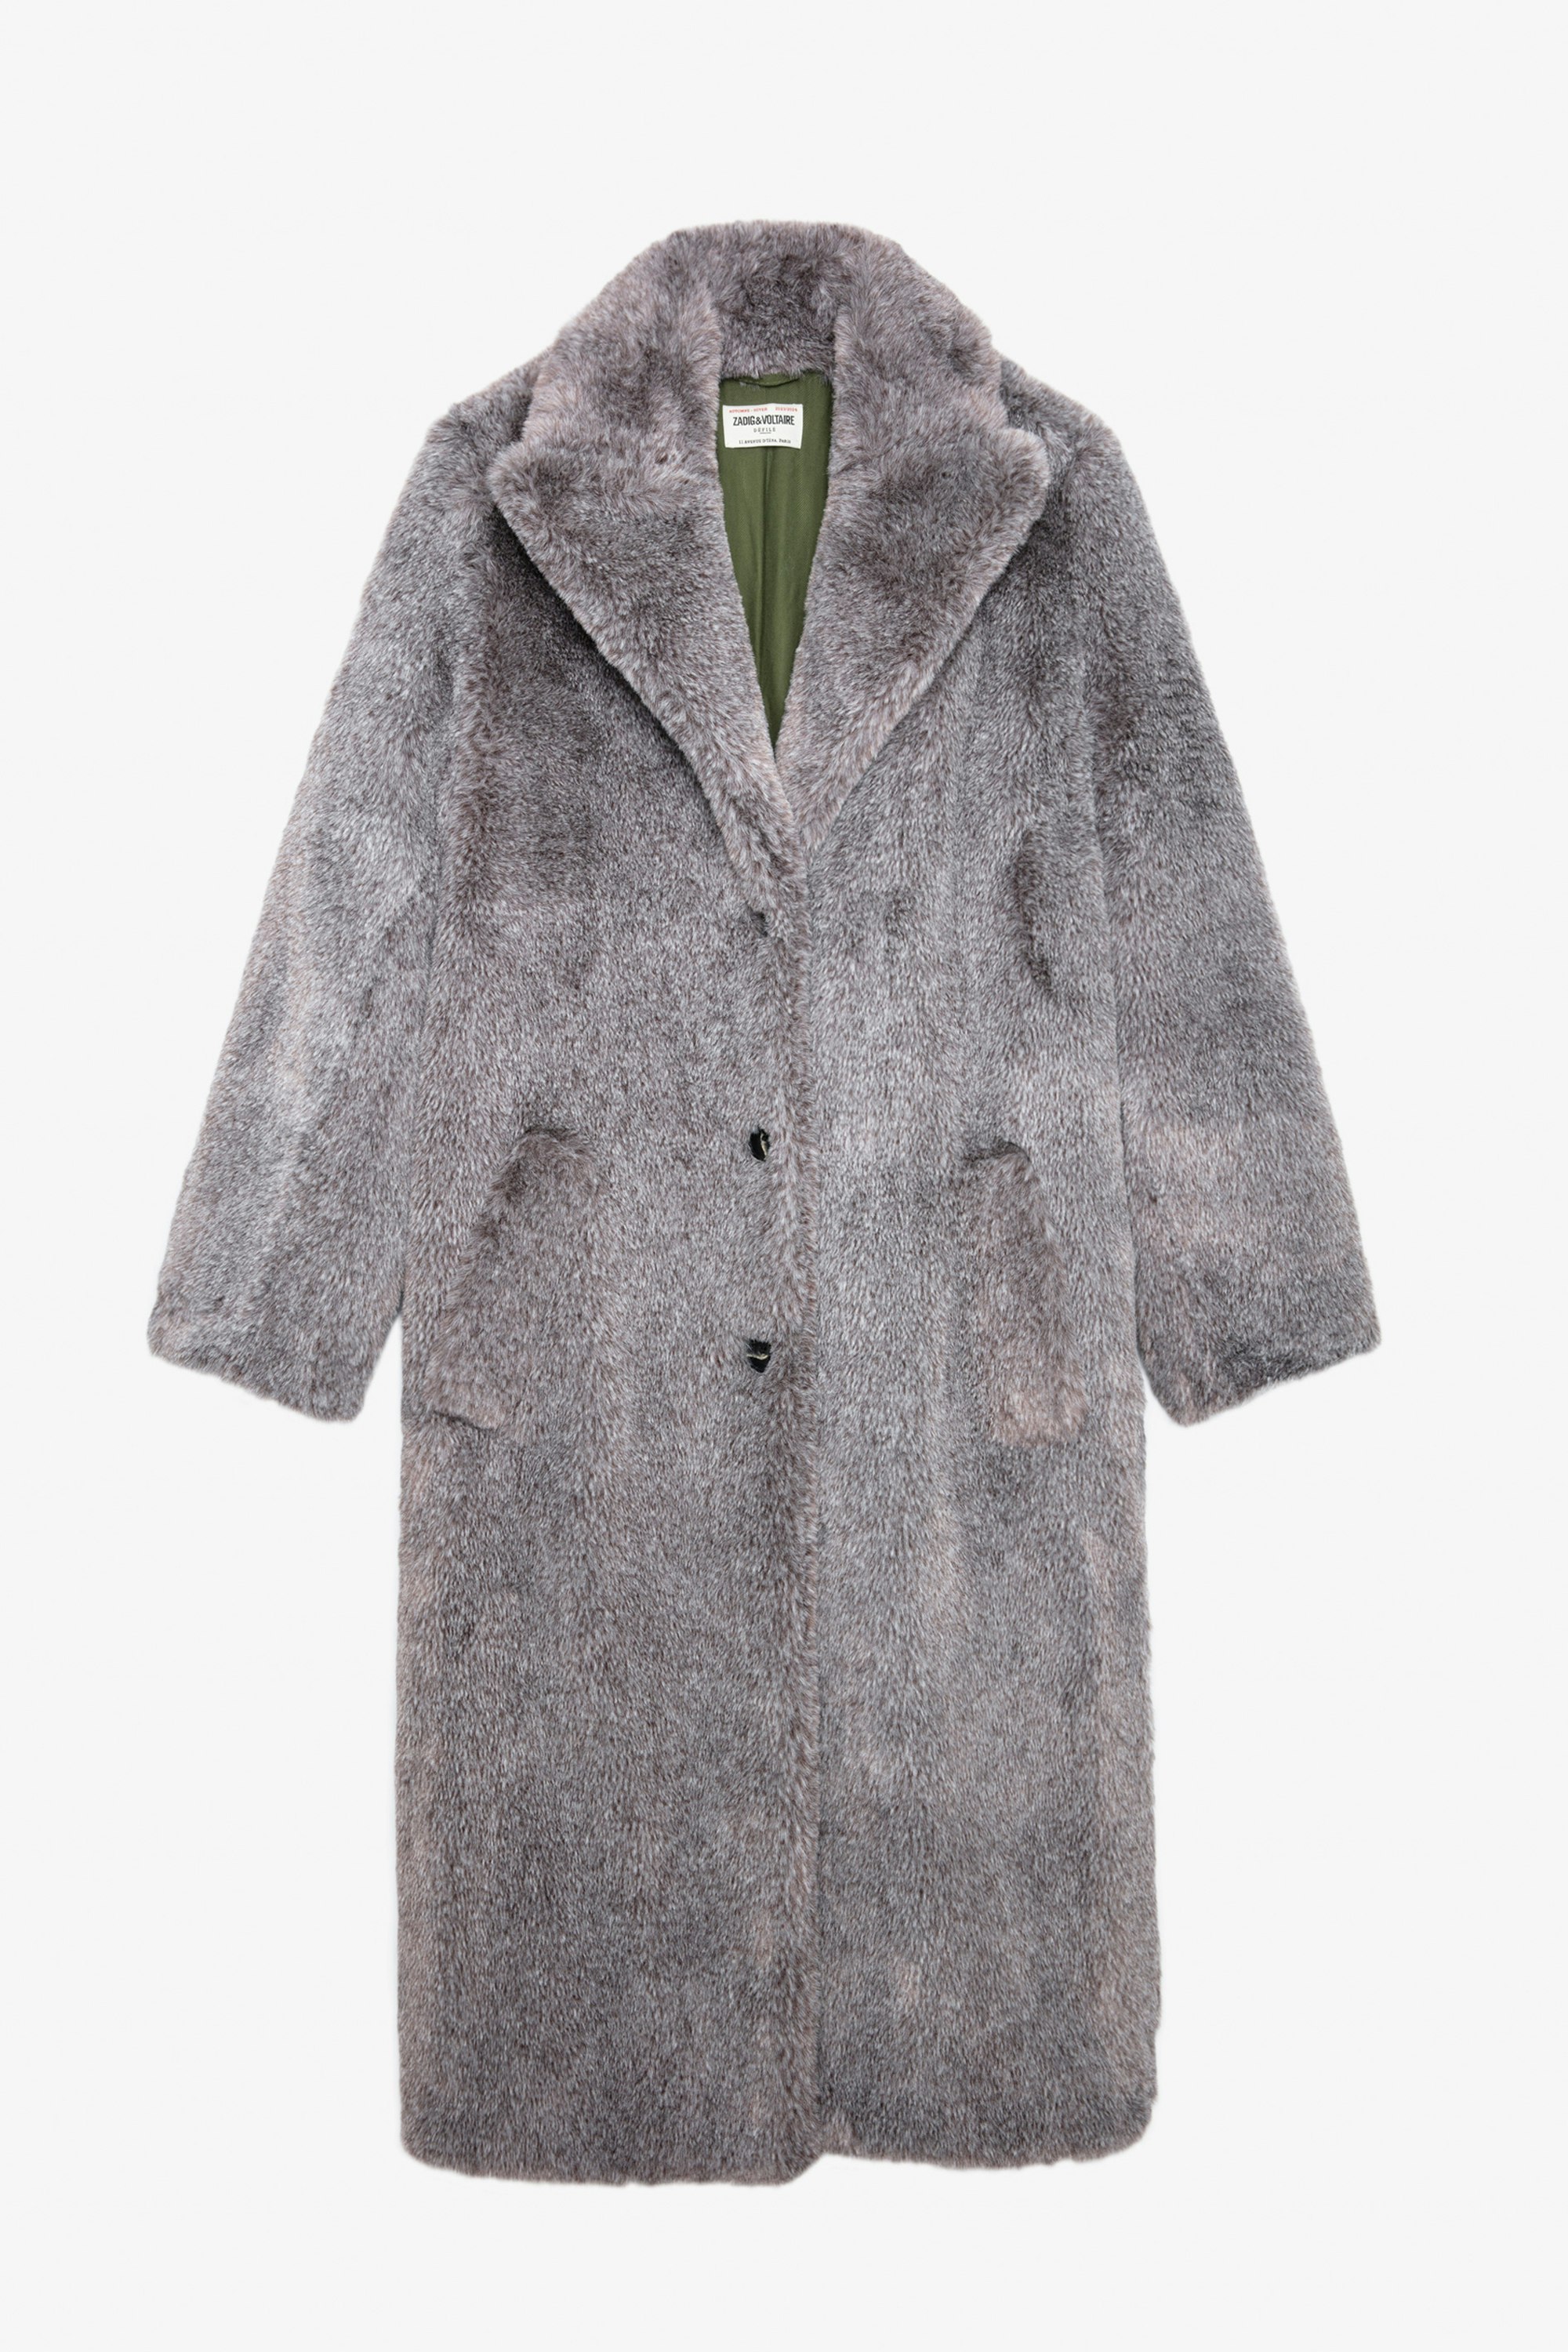 Manacoco Coat - Women’s long brown faux fur coat.